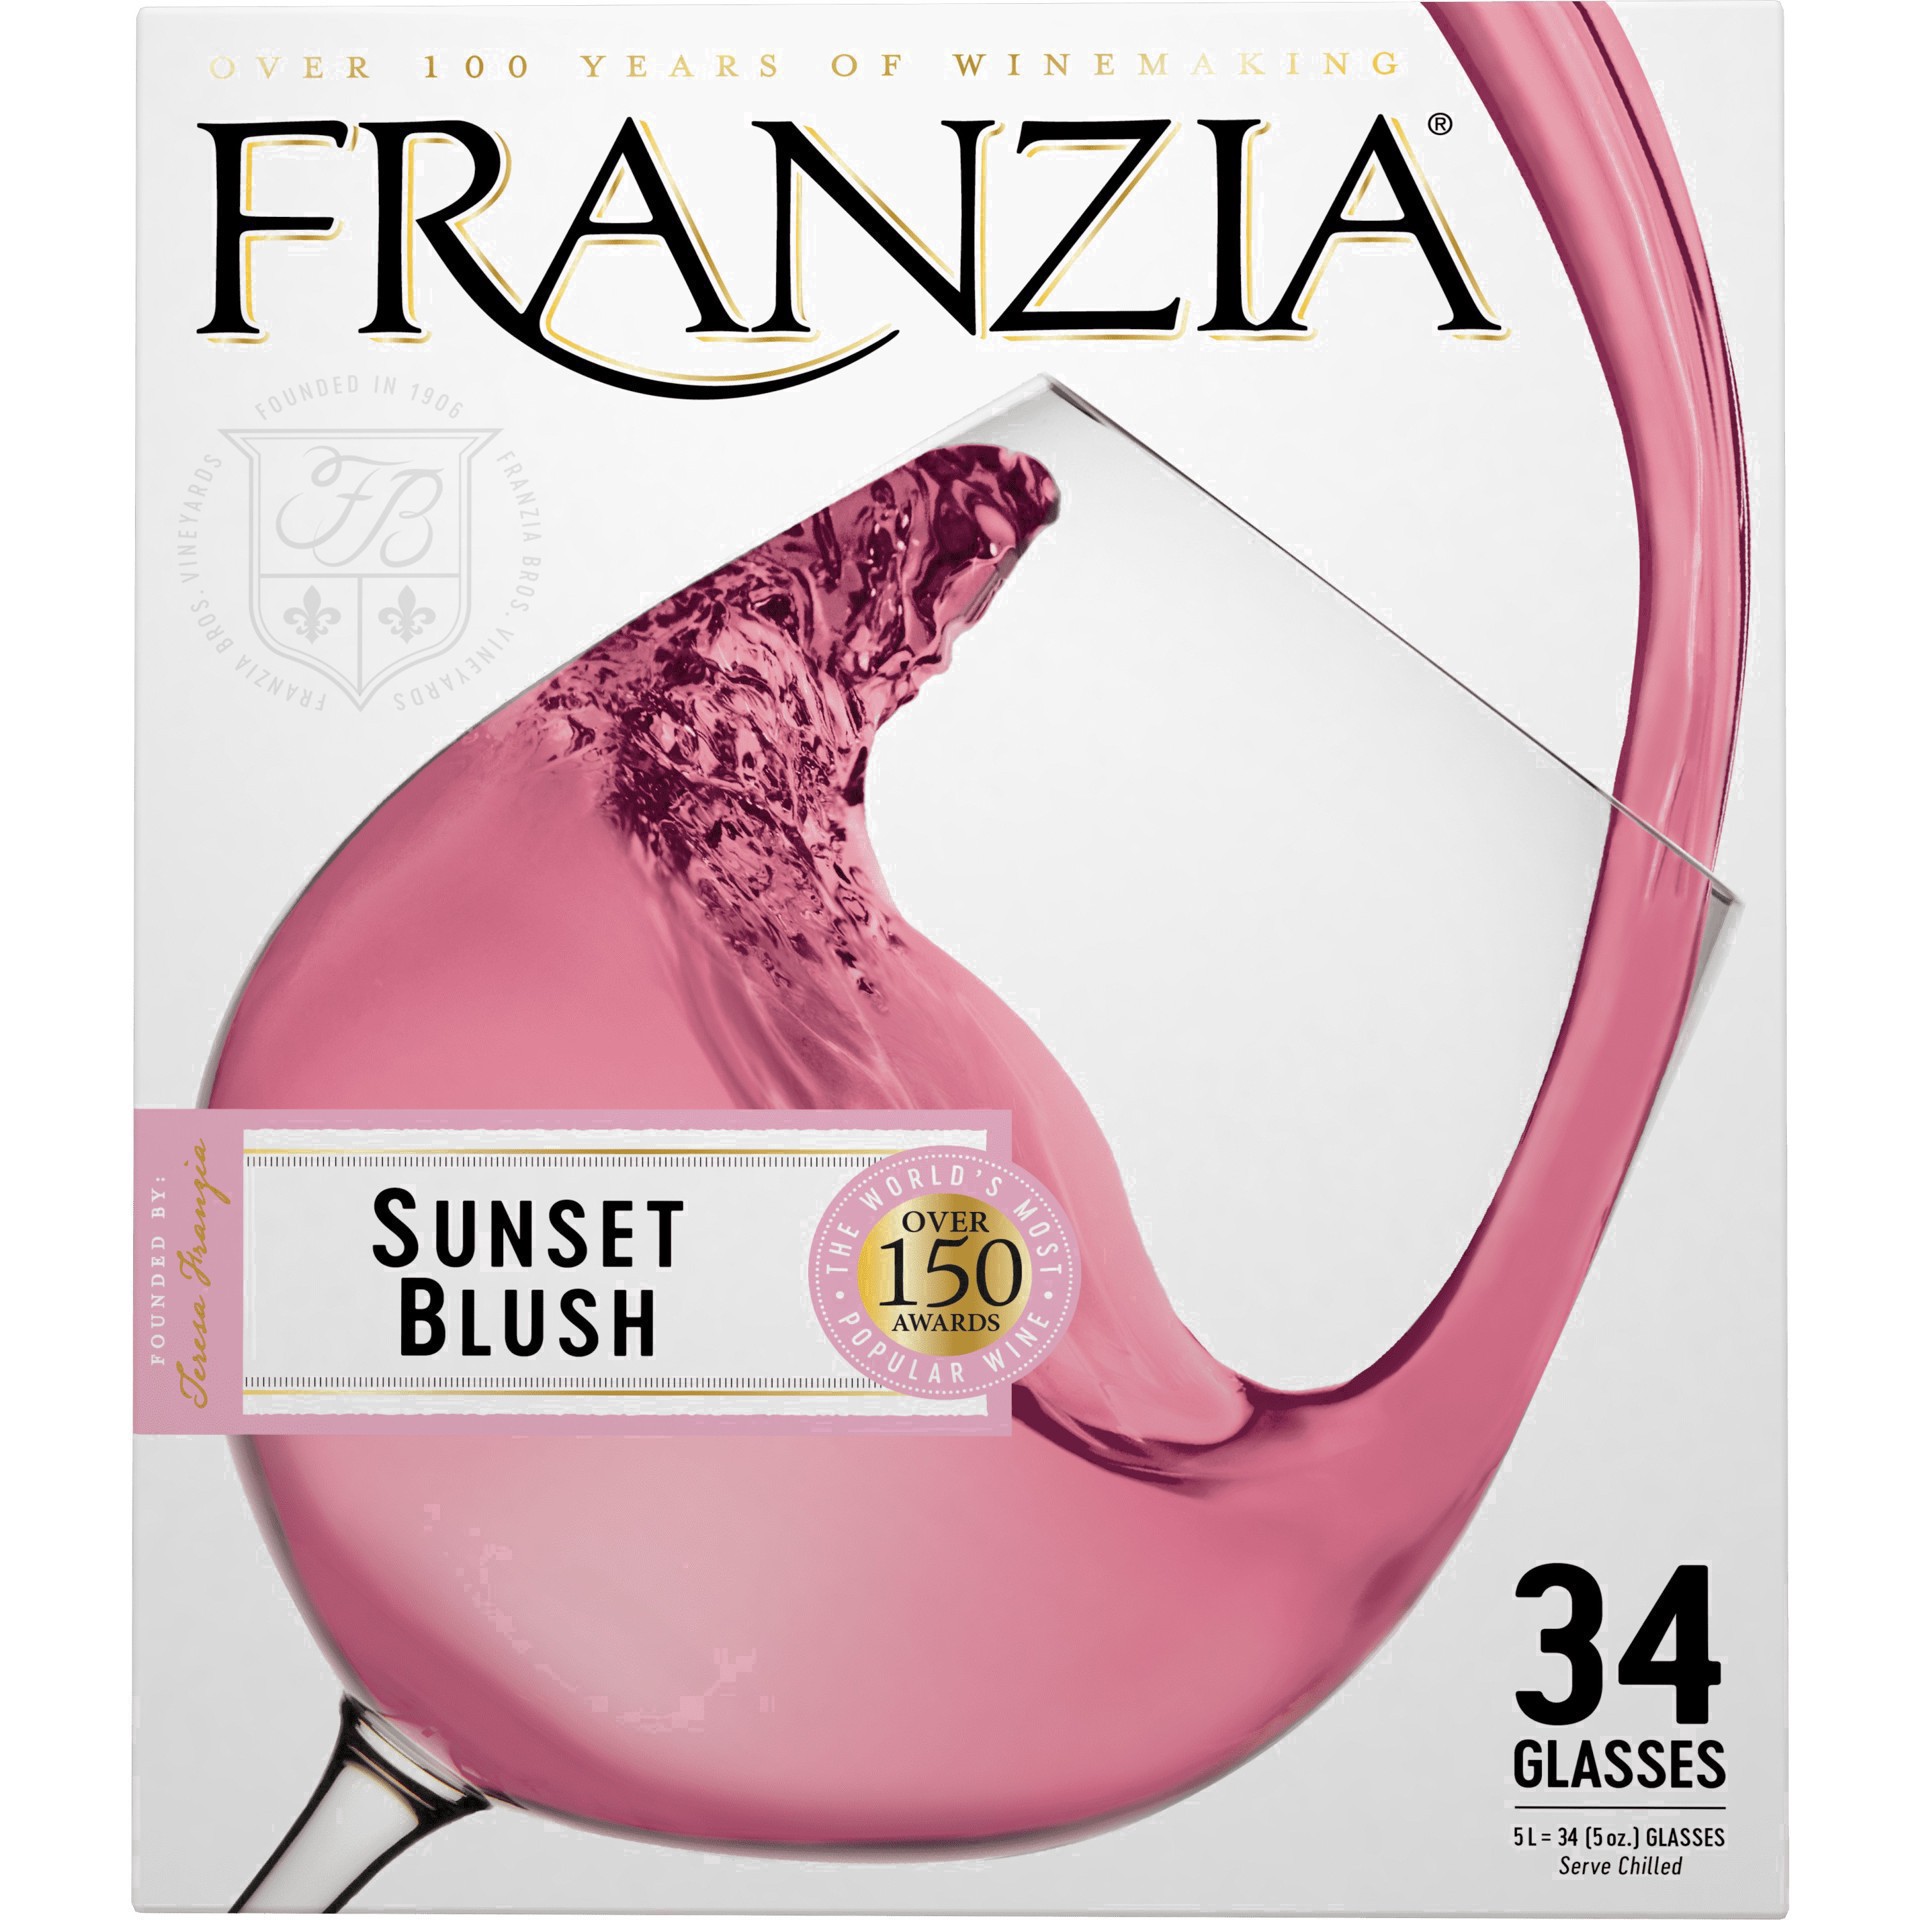 slide 7 of 27, Franzia Sunset Blush Rose Wine - 5L Box, 5 liter